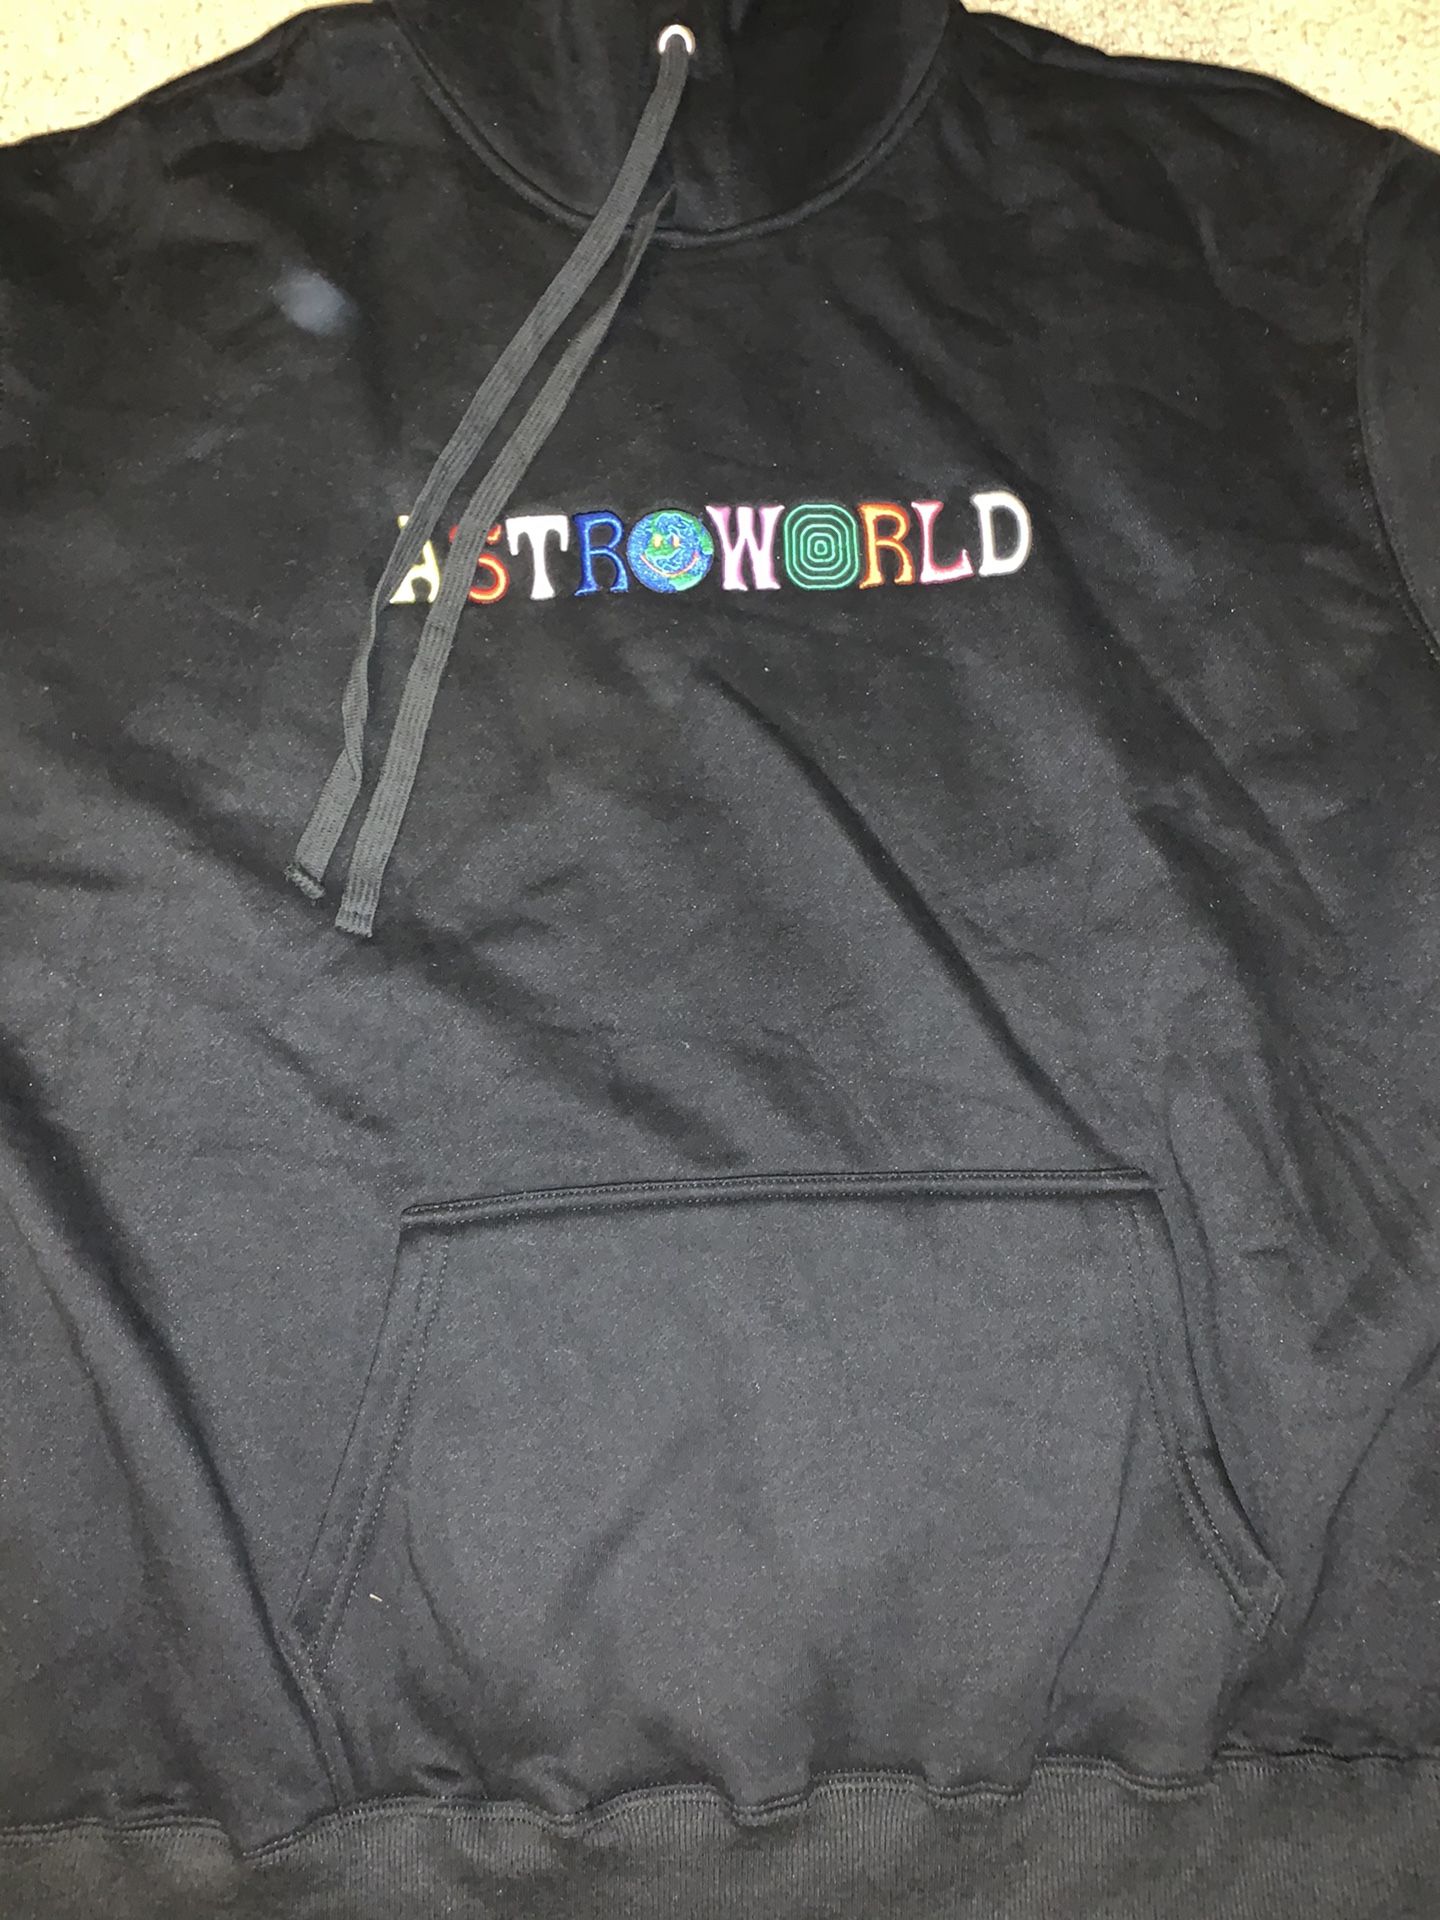 Astroworld hoodies